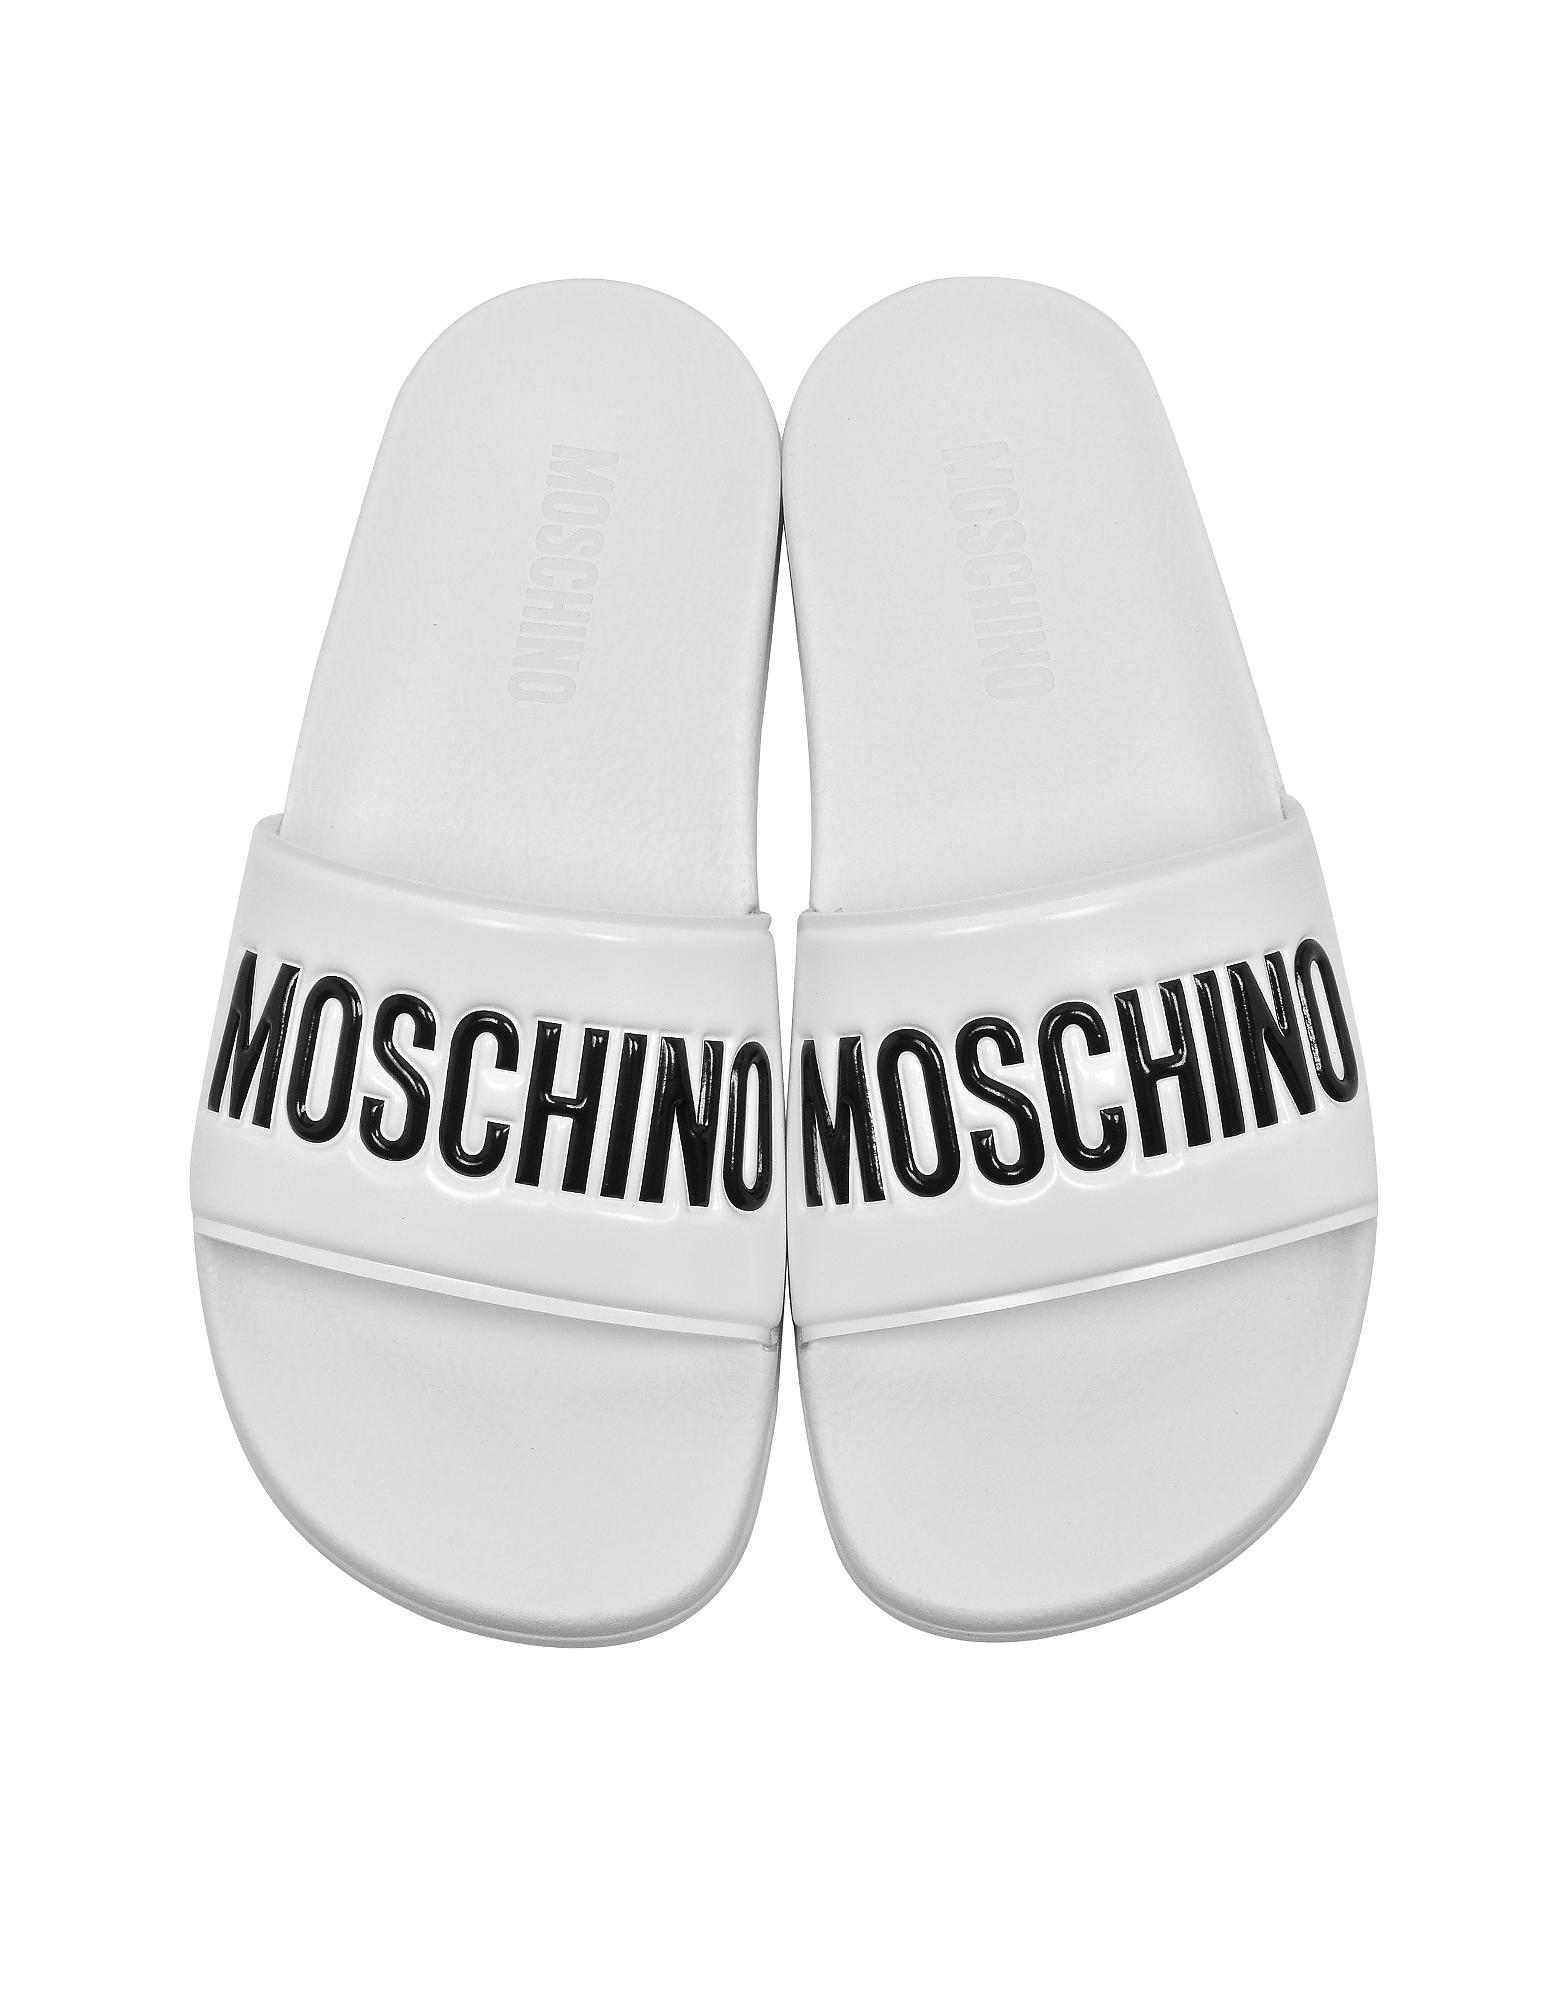 Lyst - Moschino White Logo Rubber Pool Slider Sandals in White